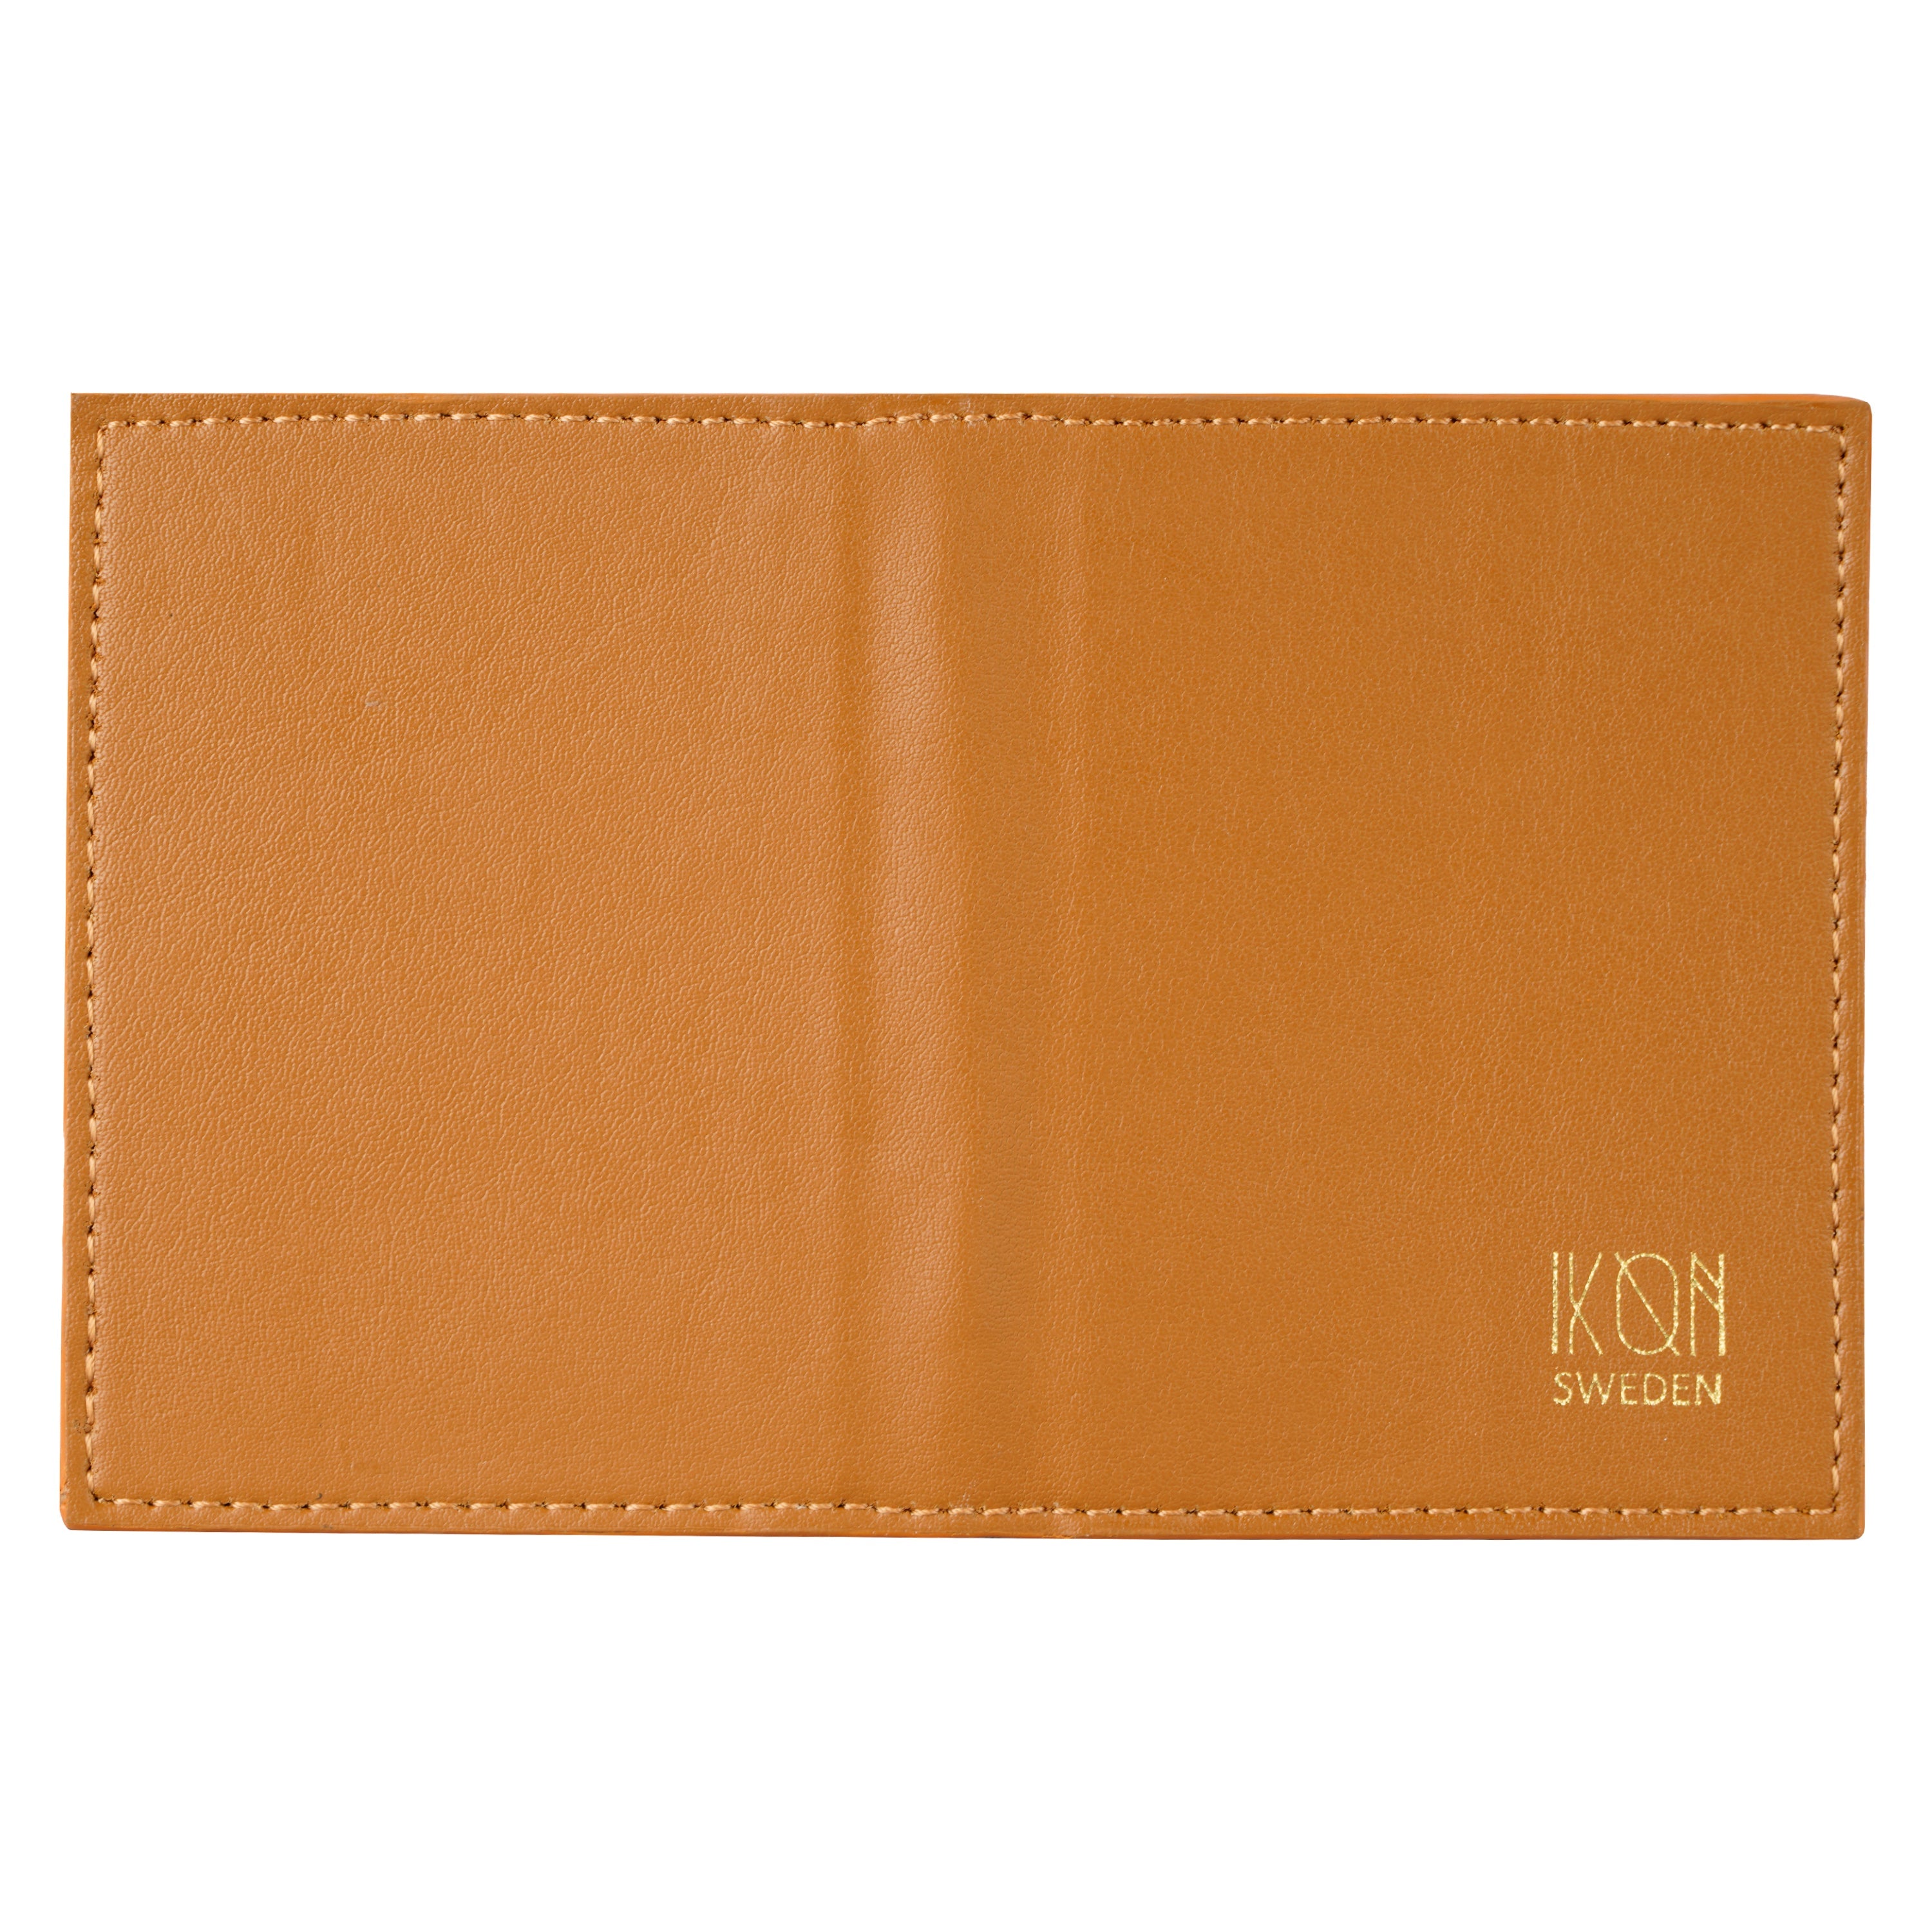 Cactus Leather BiFold Card Wallet - Cognac-2